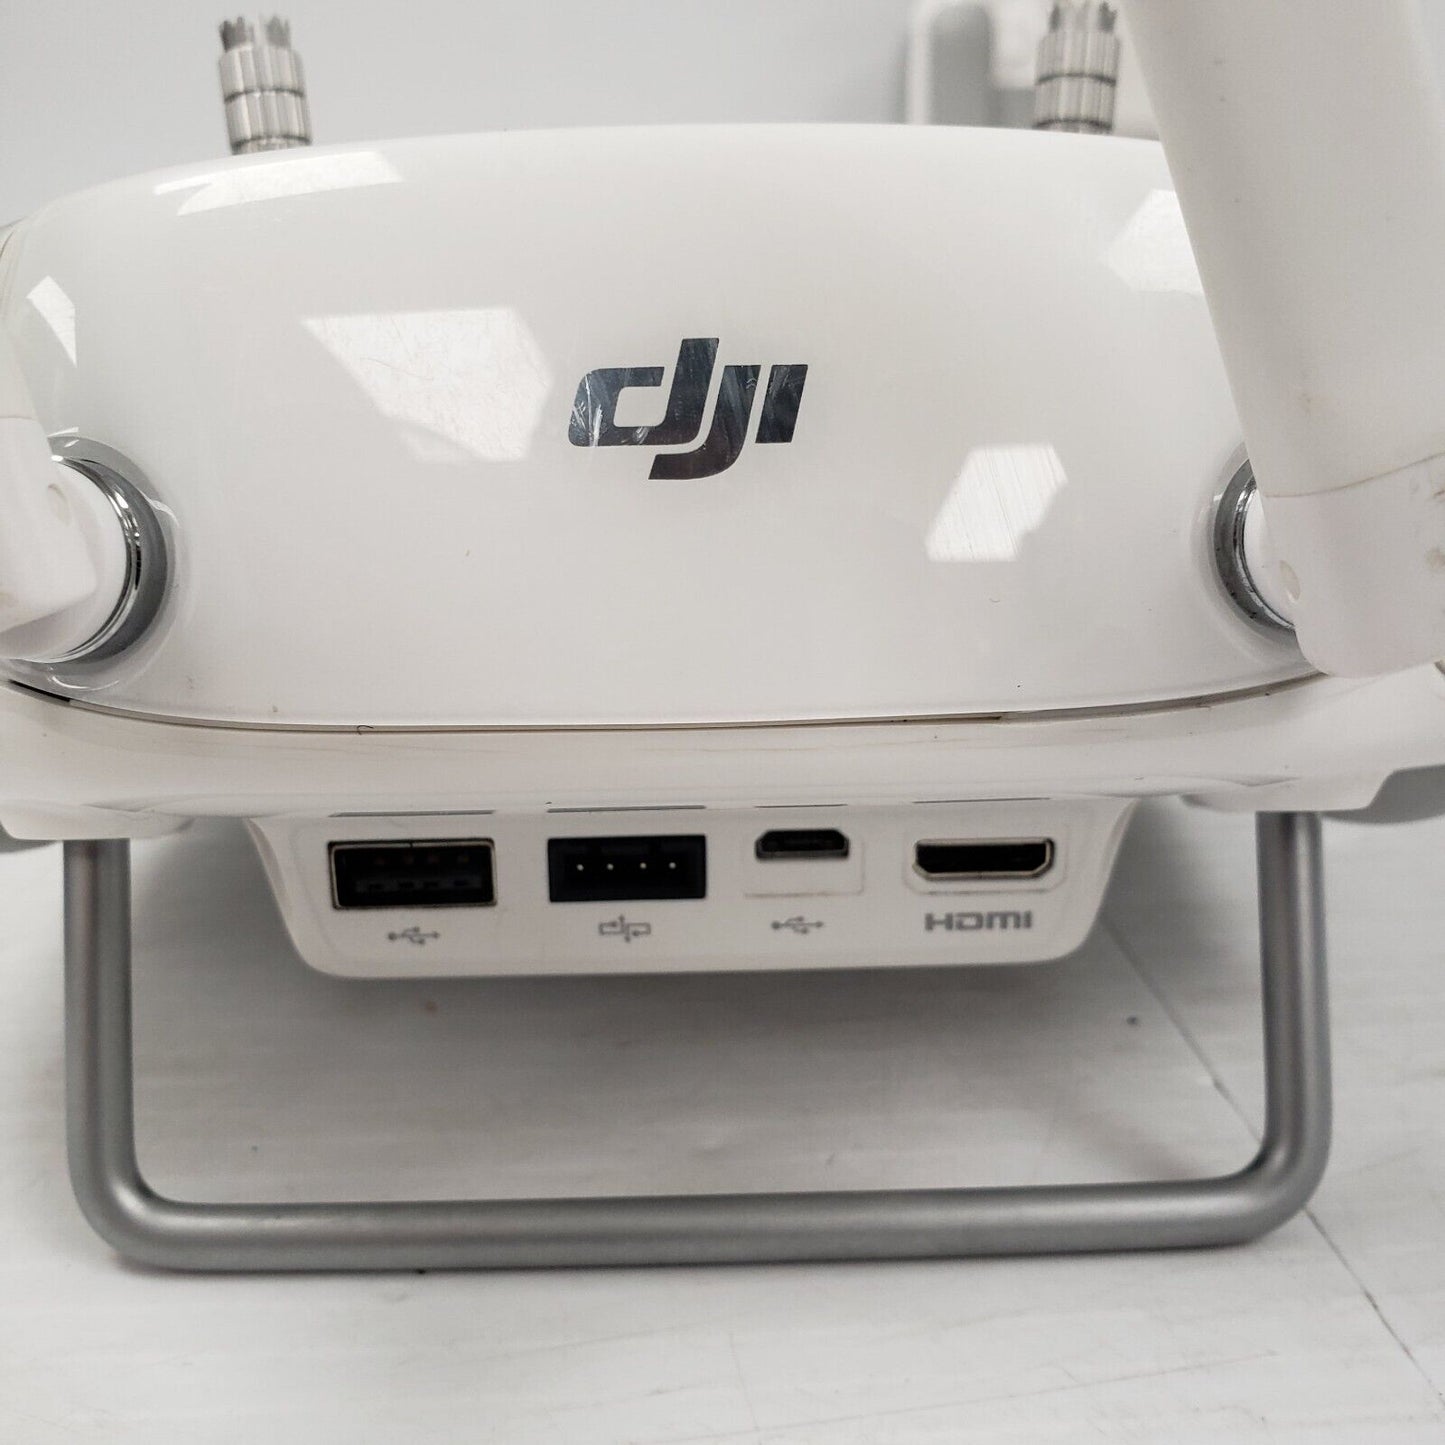 (53777-1) DJI Inspire 1 Drone